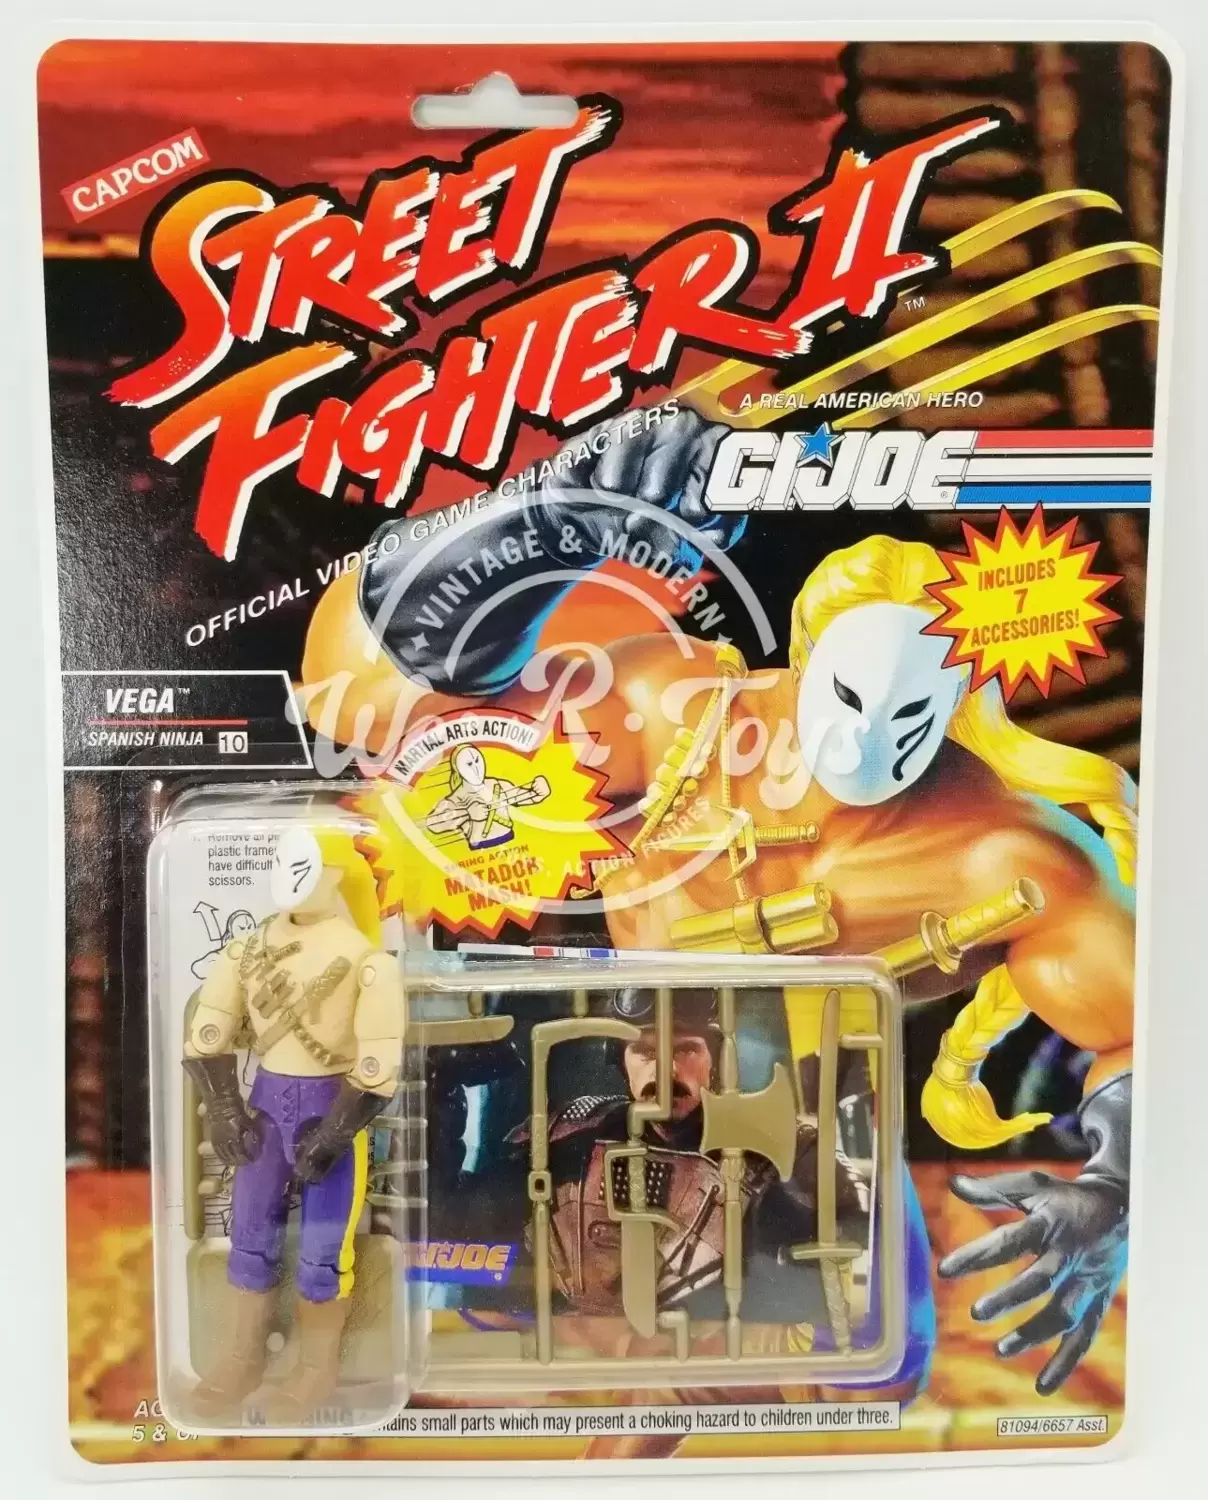 Vega - G.I. JOE - Street Fighter II action figure